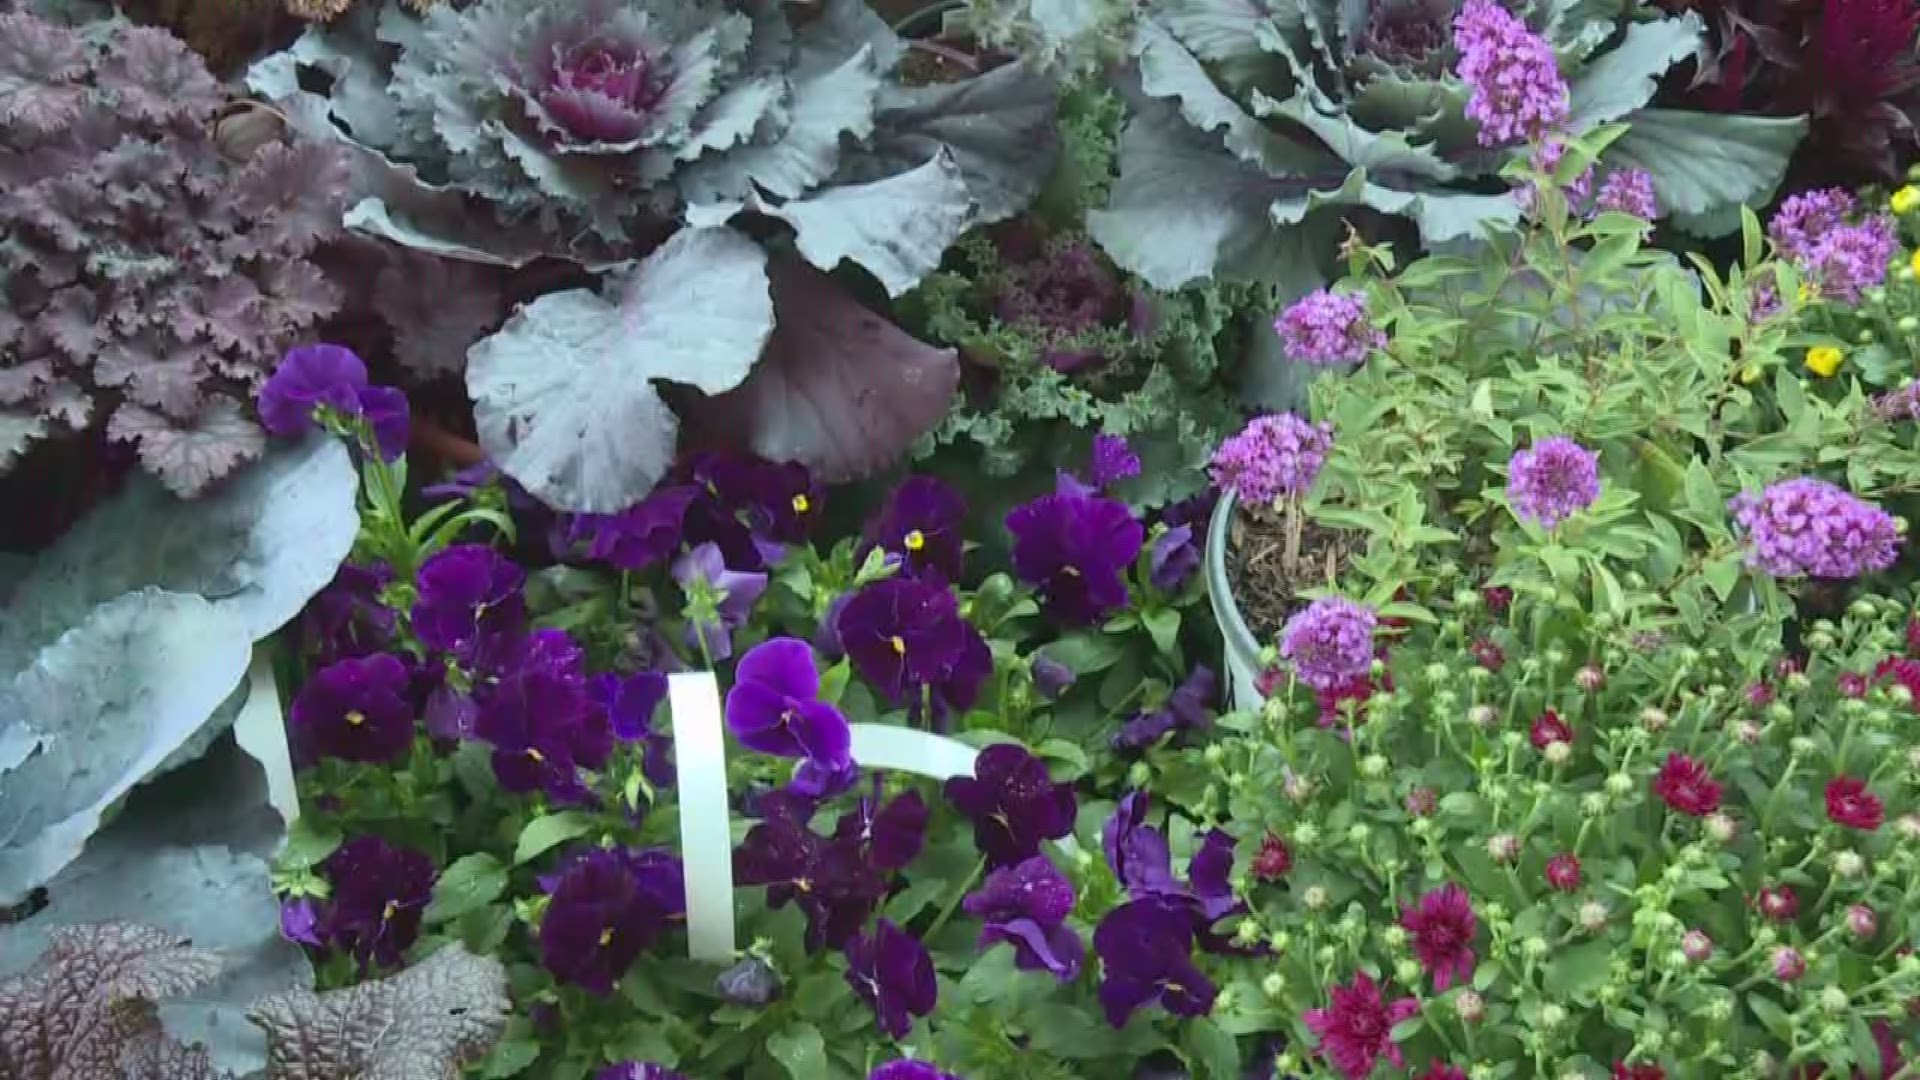 Greenthumb: Purple in the garden